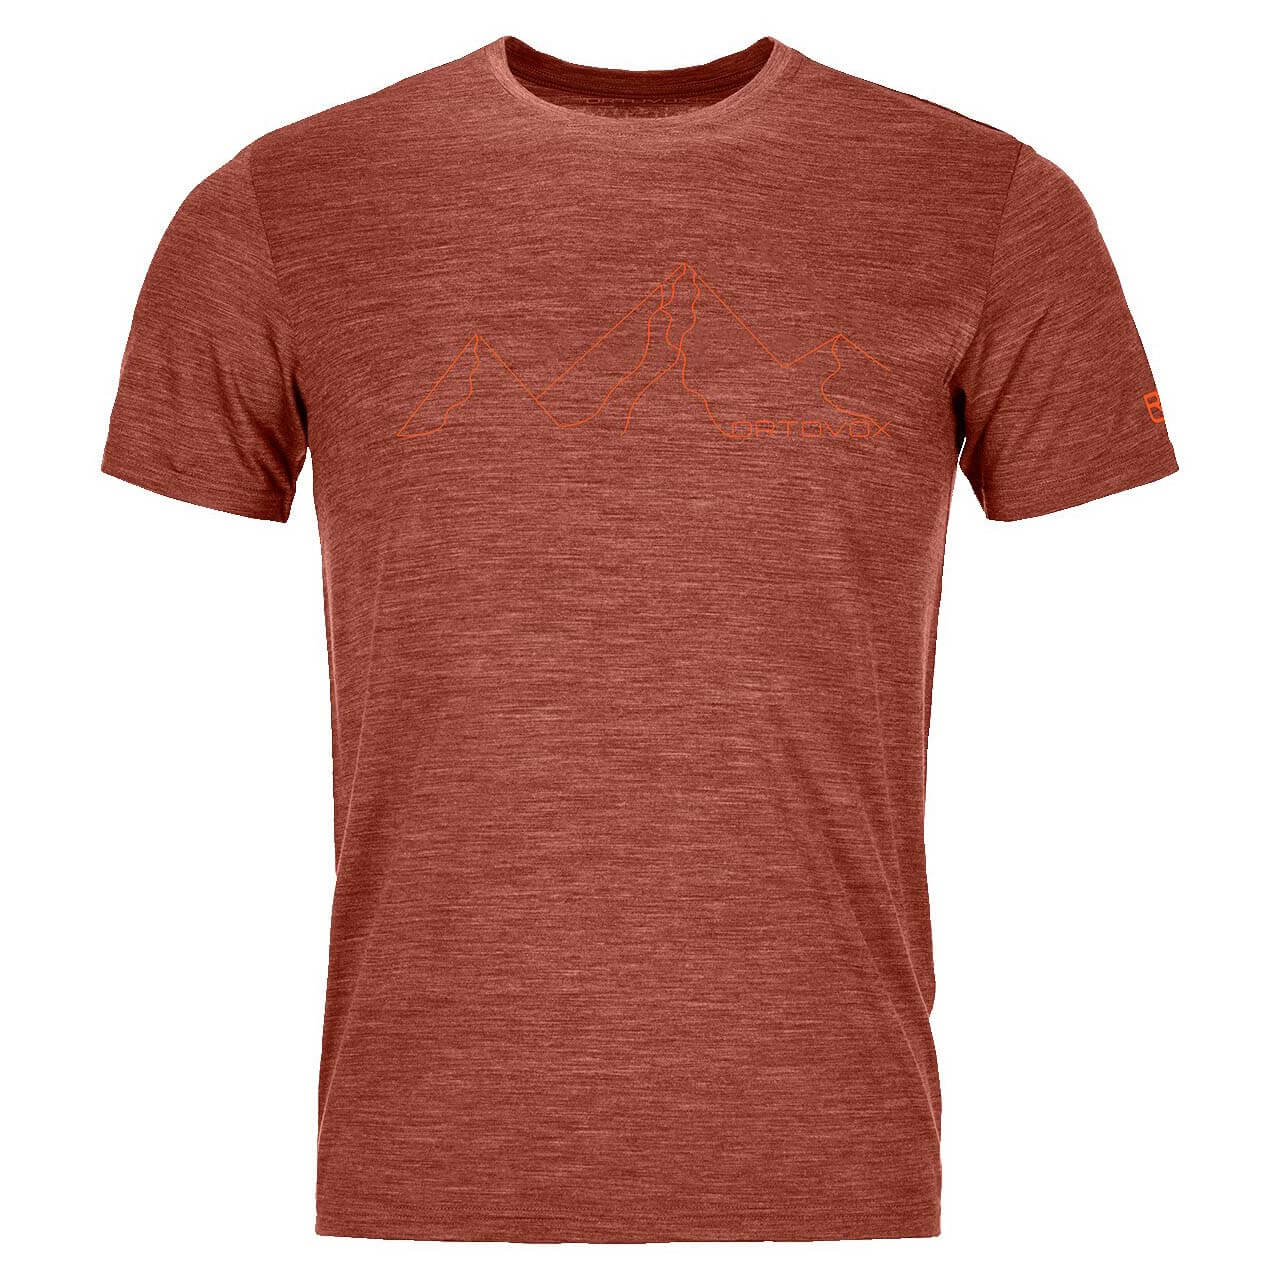 Ortovox Mountain T-Shirt 150 Cool - Clay Orange Blend, L von Ortovox